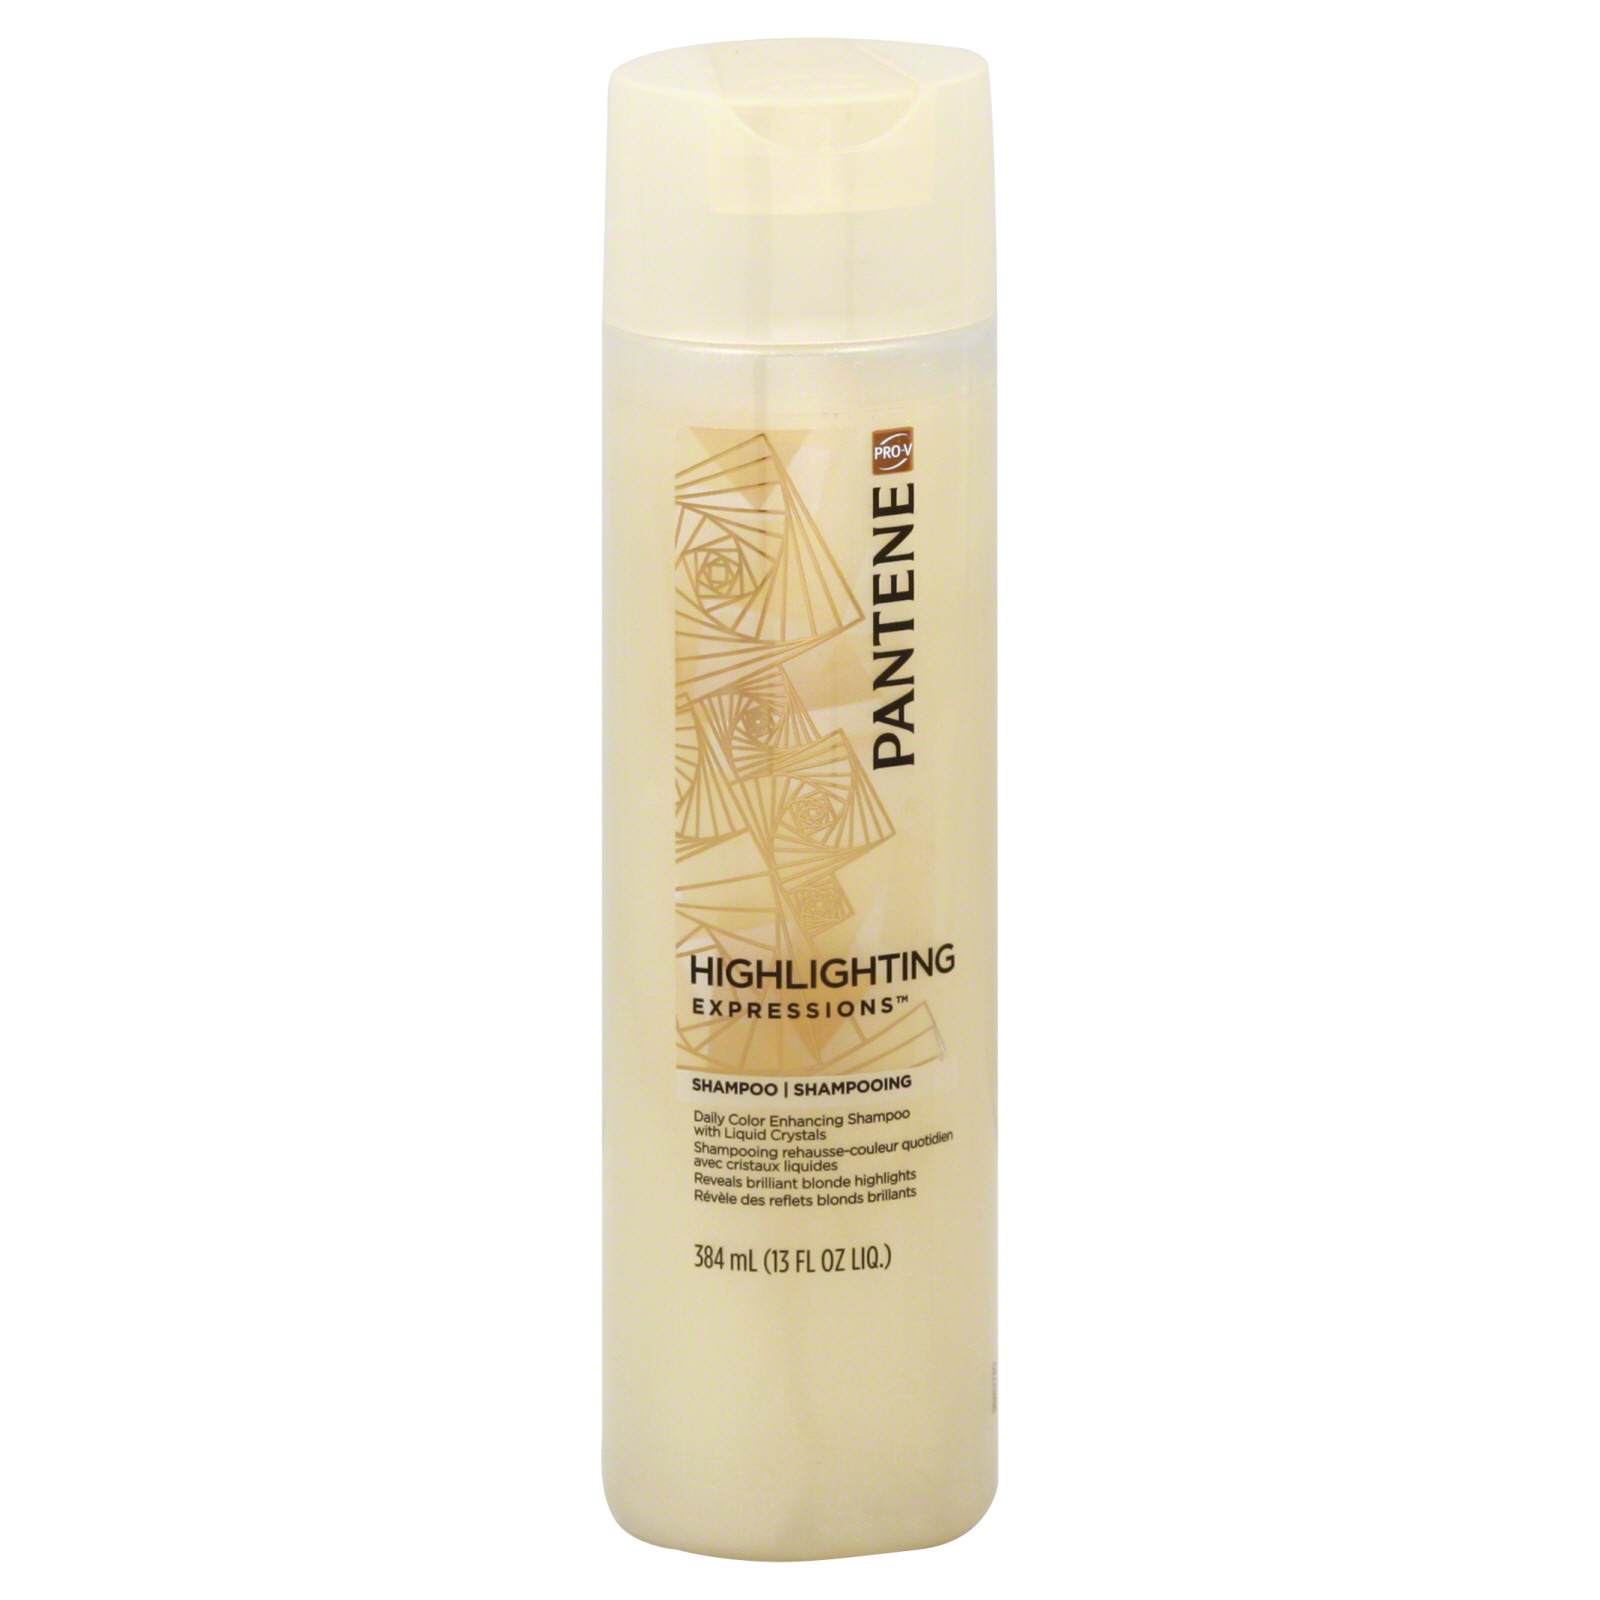 Pantene Pro-V Highlighting Expressions Shampoo, Daily Color Enhancing, 13 fl oz (384 ml)